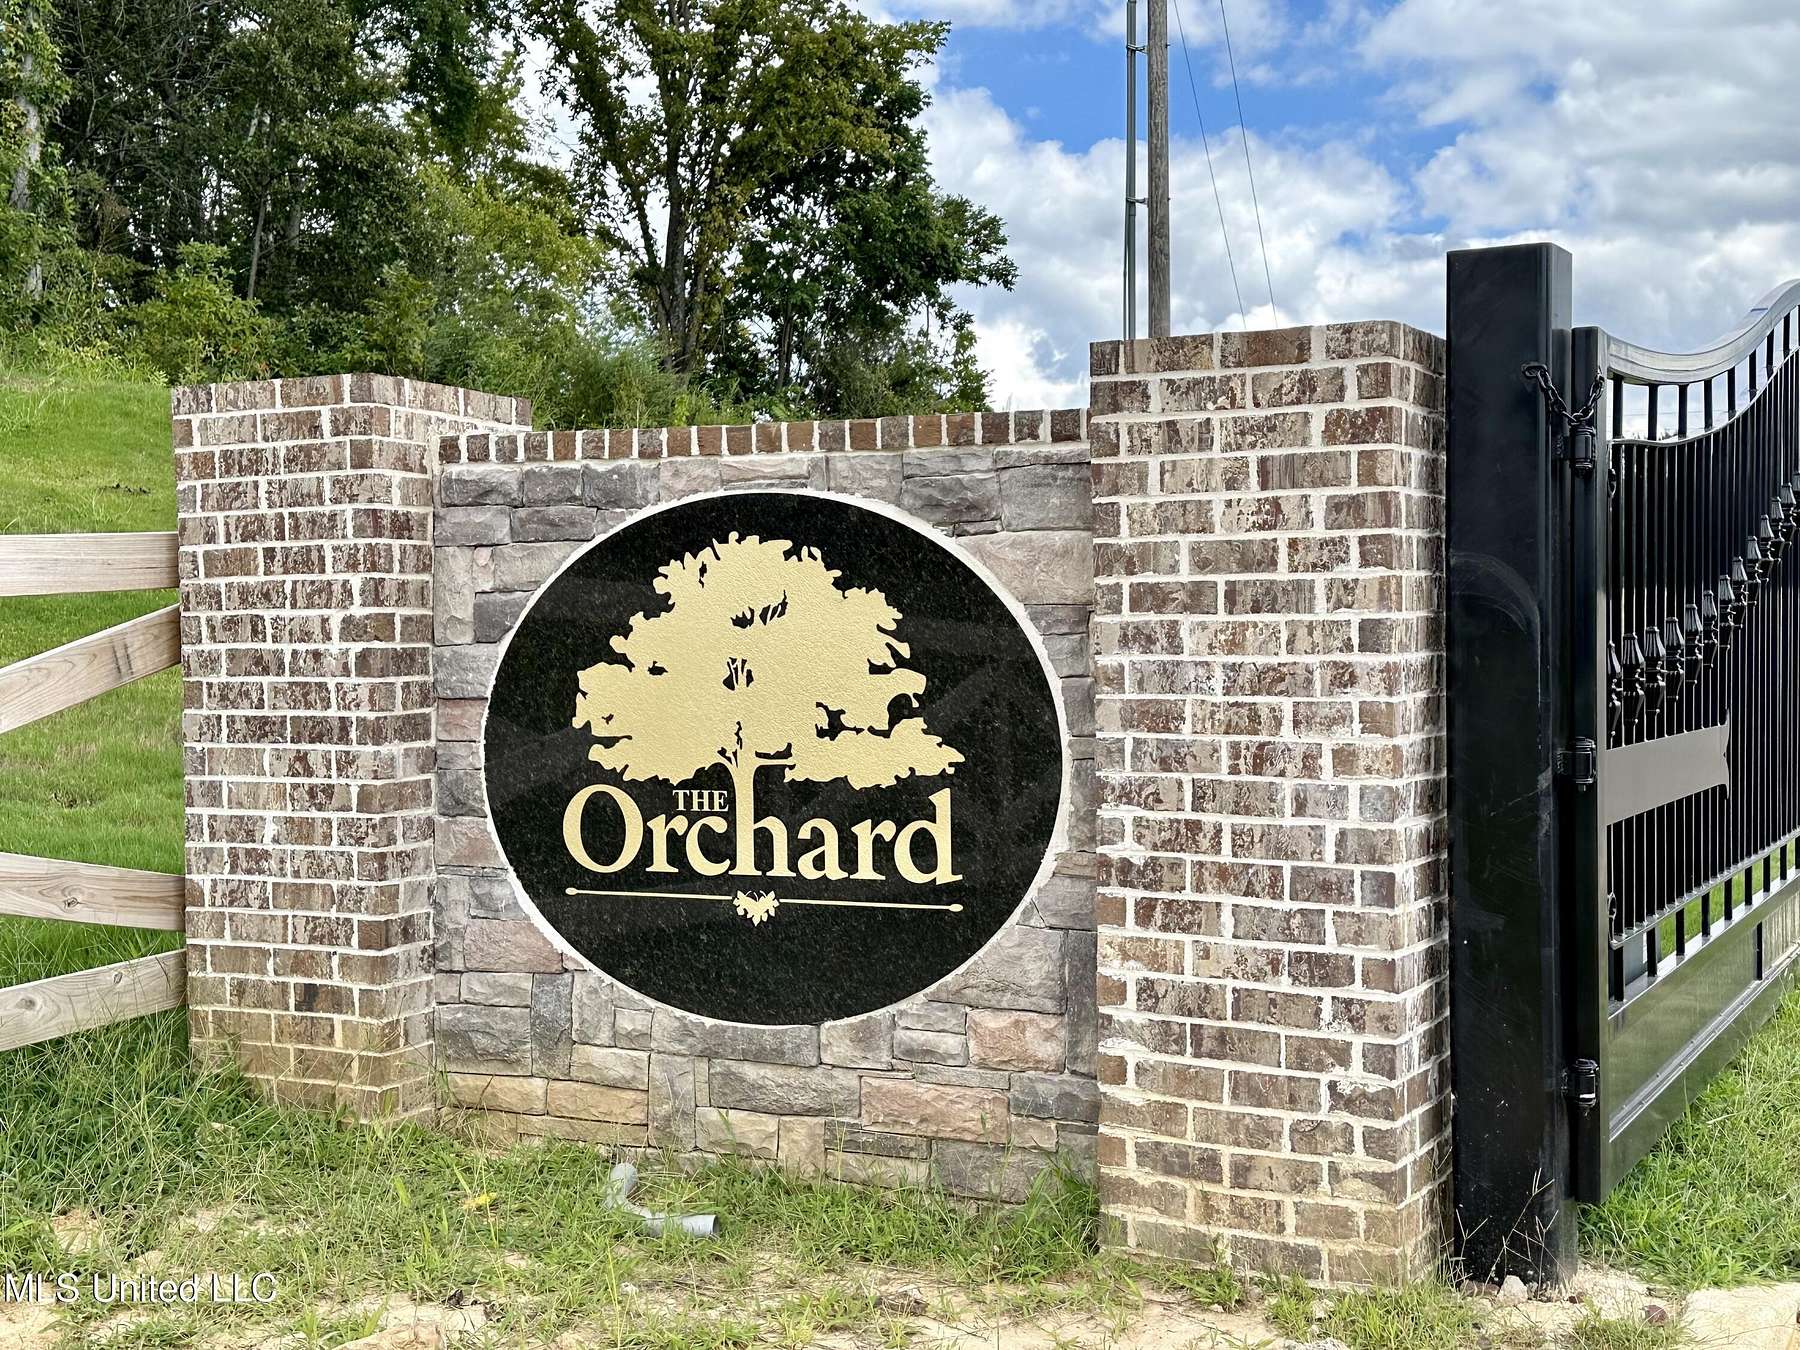 1.1 Acres of Residential Land for Sale in Olive Branch, Mississippi